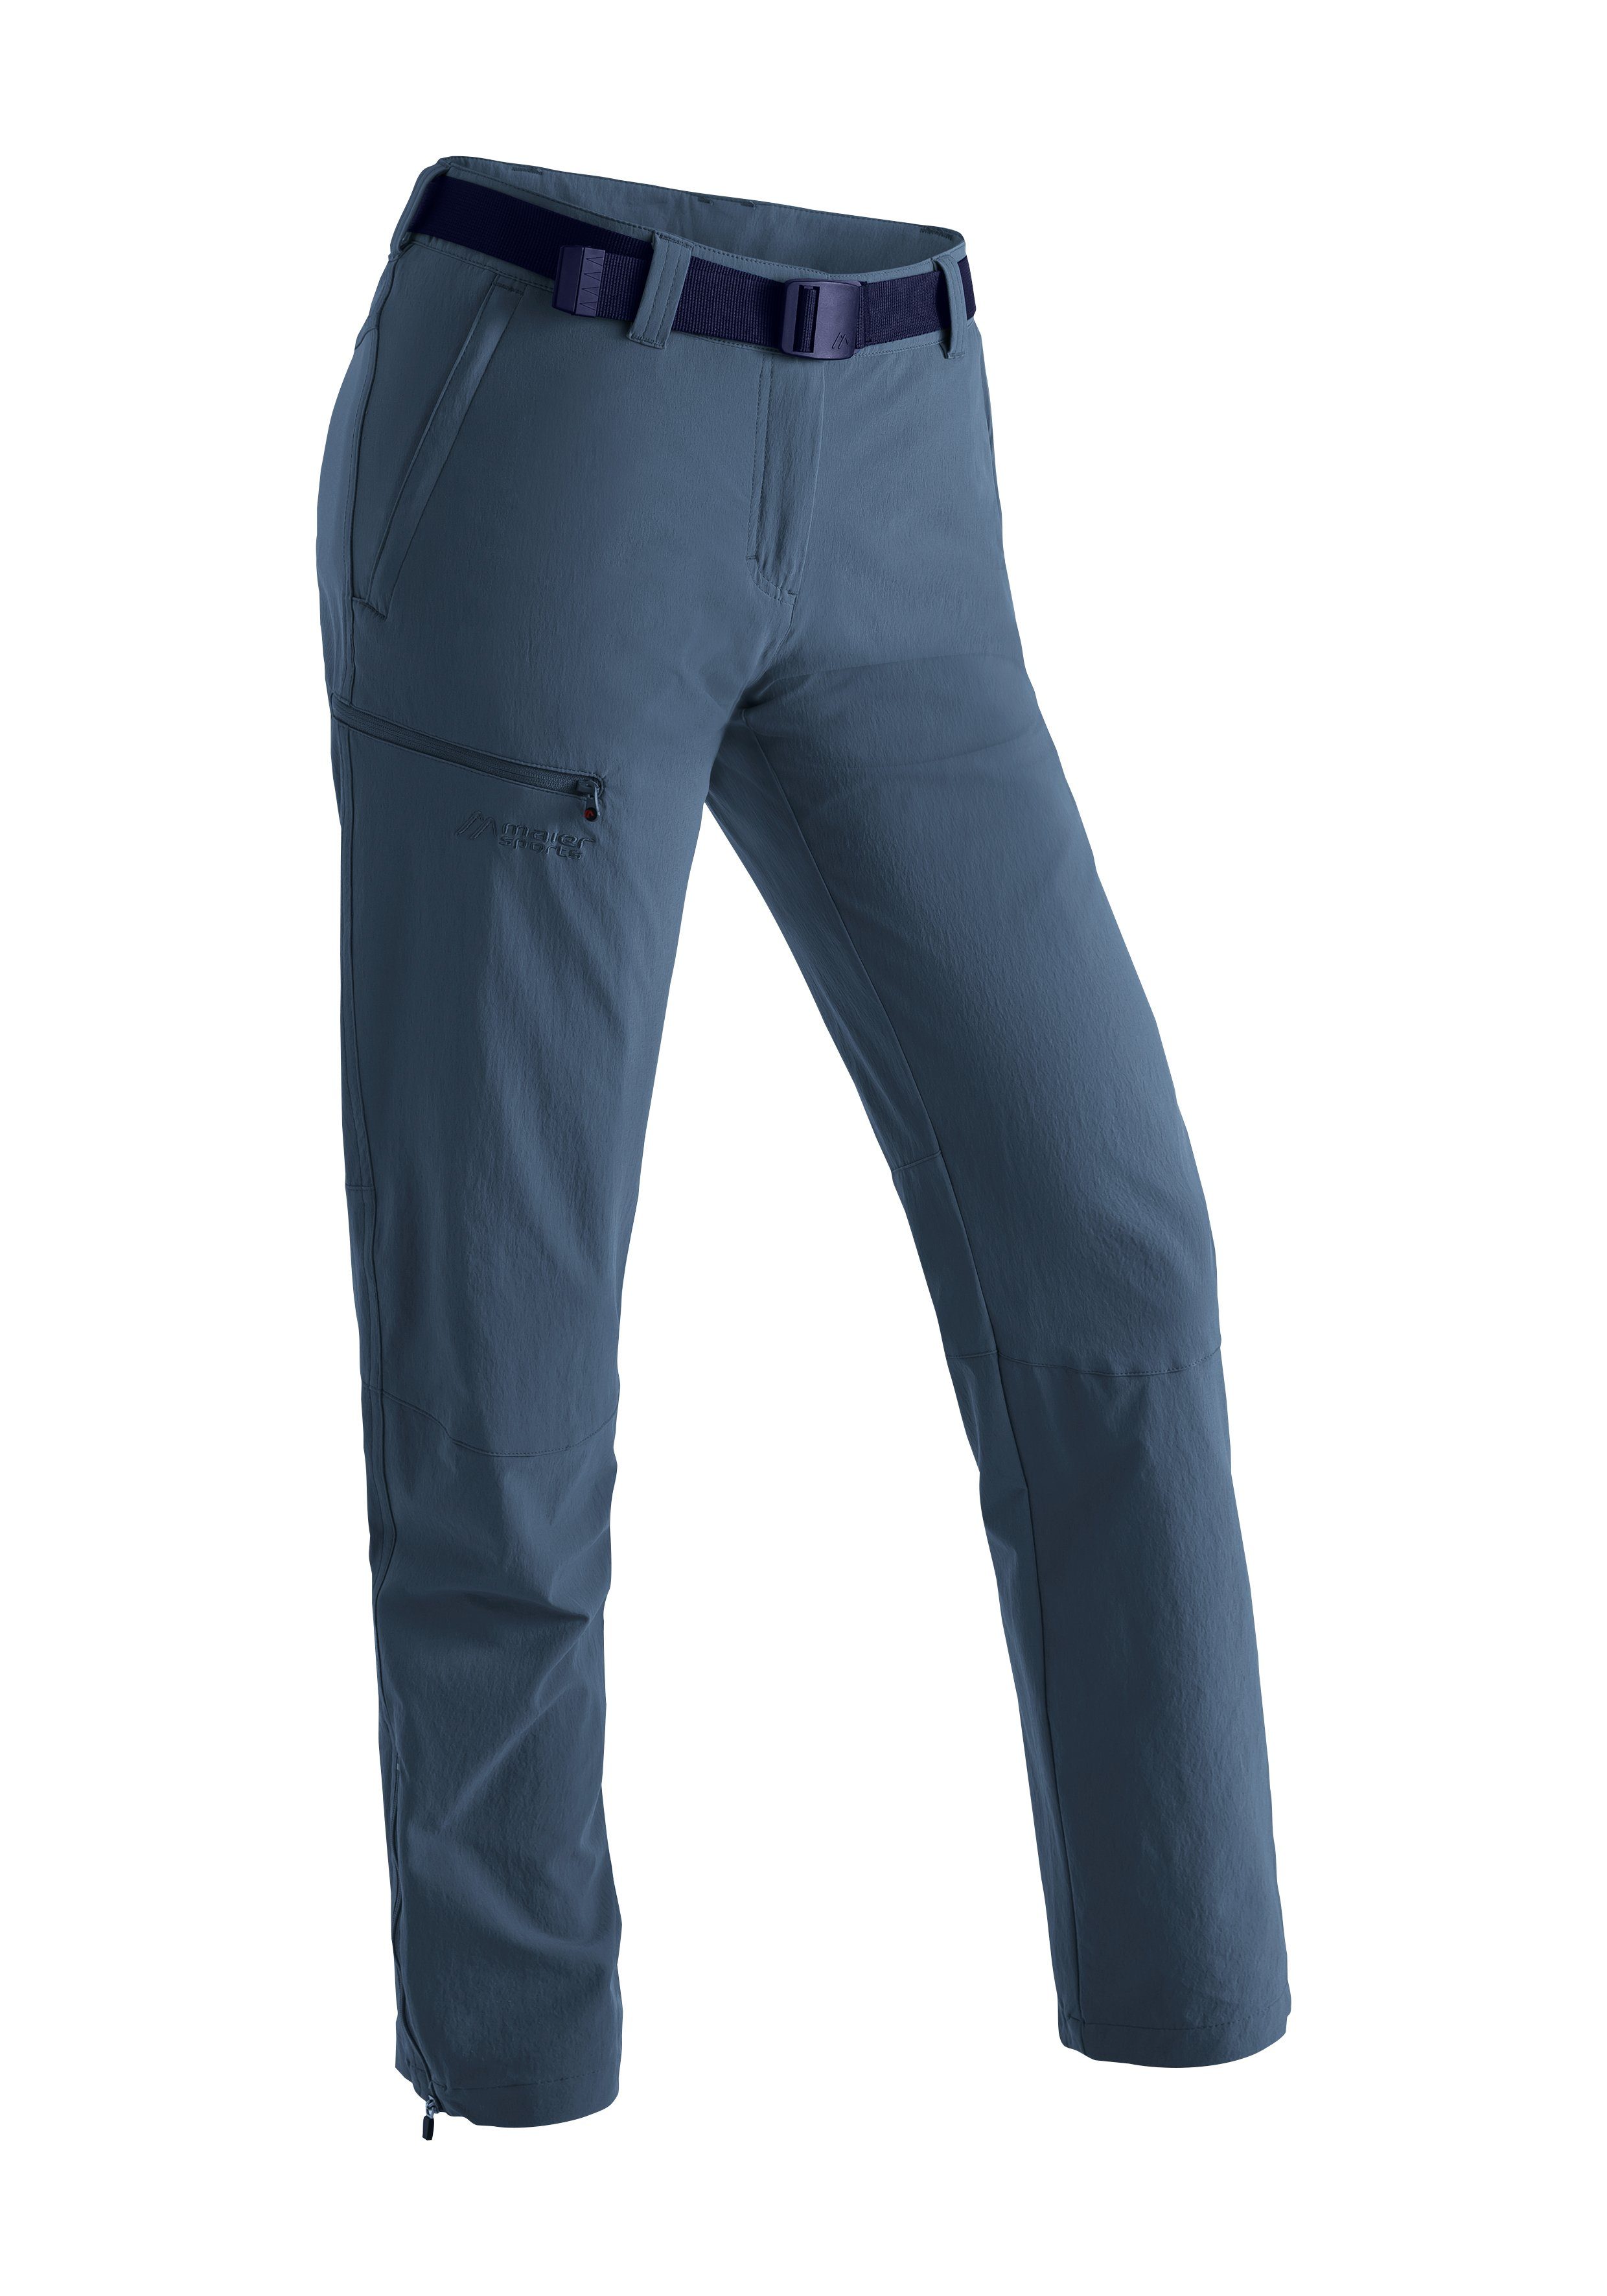 Outdoor-Hose jeansblau Funktionshose slim Sports Damen Maier Inara aus Wanderhose, elastischem Material